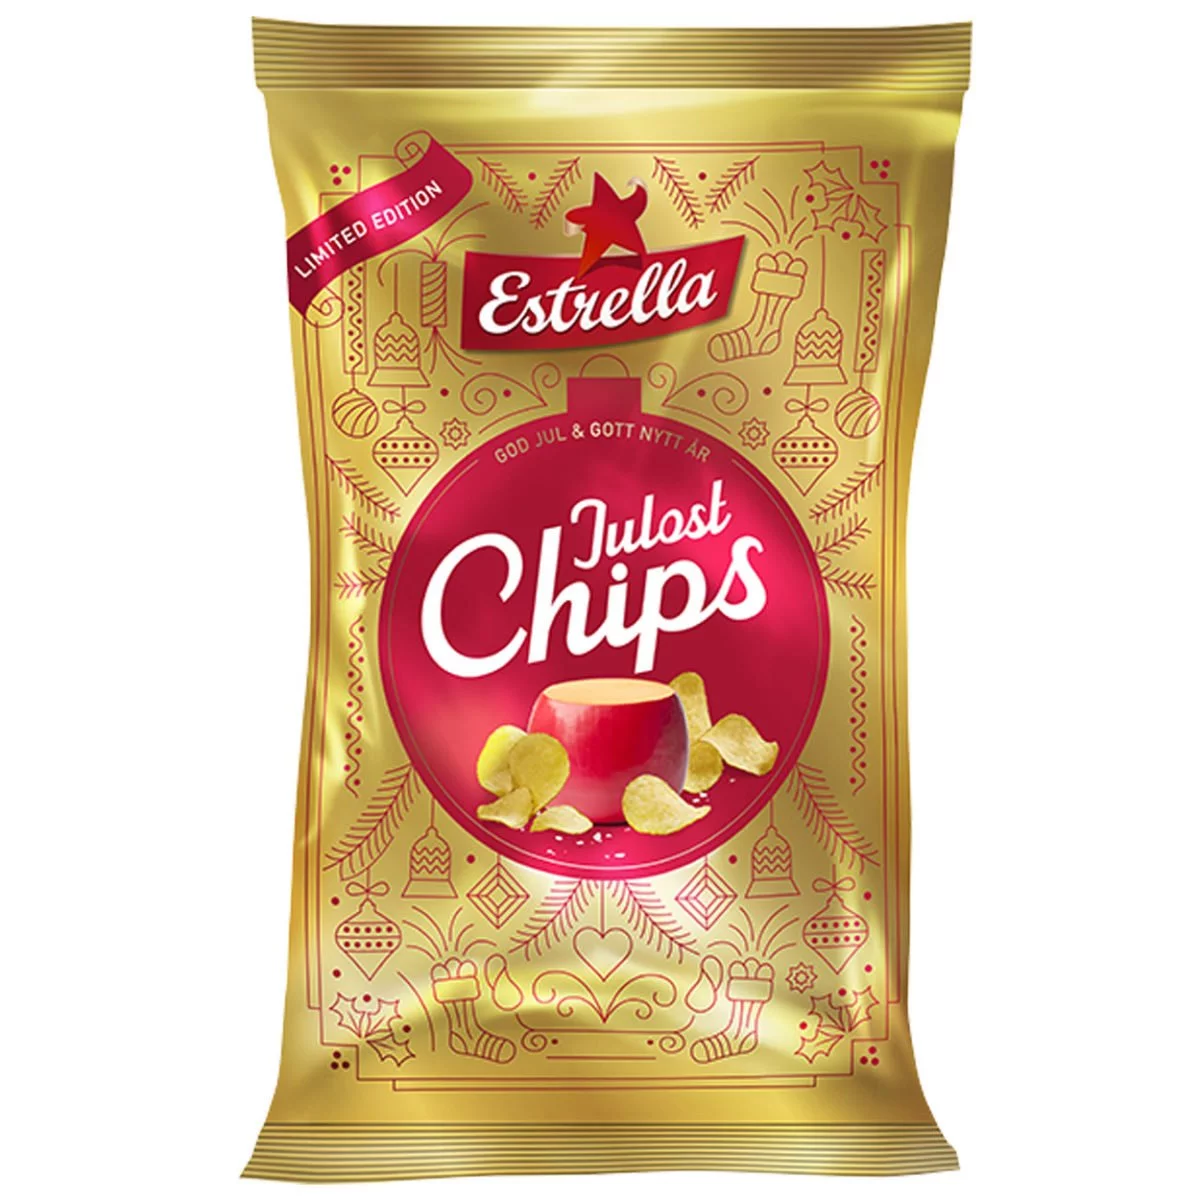 Estrella Julost Chips - Limited Edition - BIGPACK (250g) 1